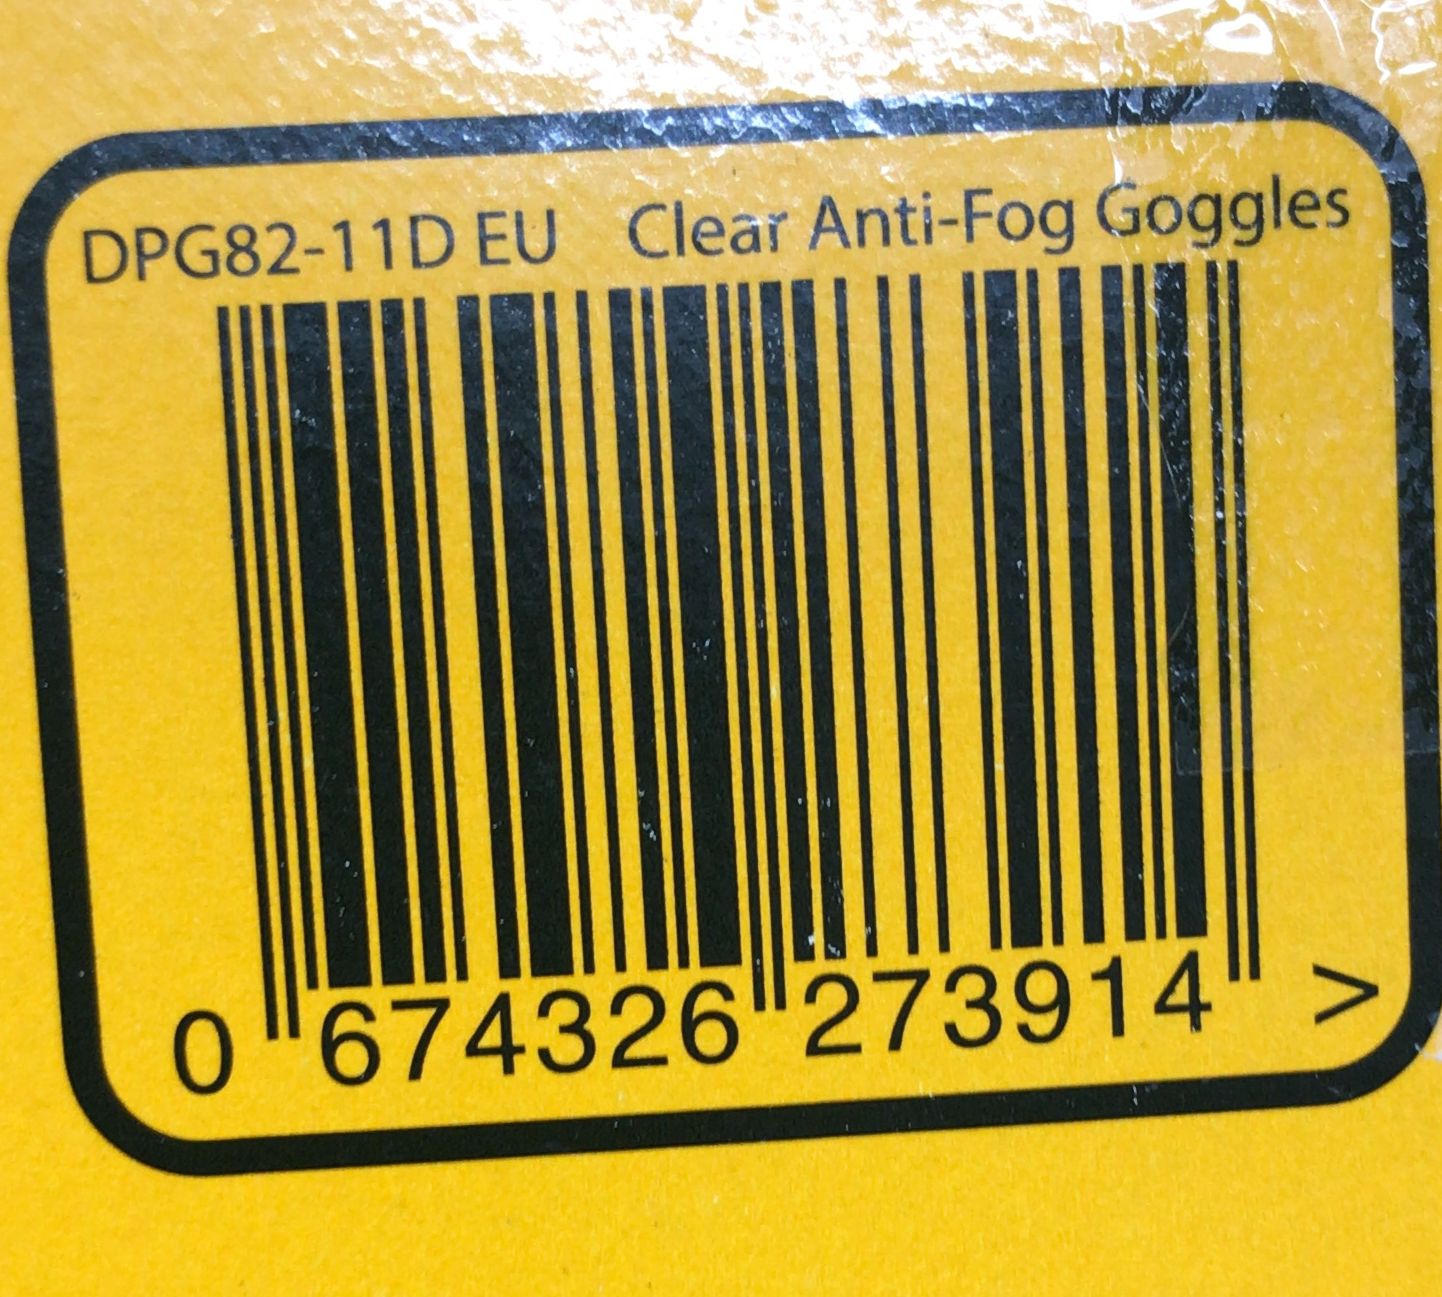 Dewalt Concealer DPG82 Safety Goggles - Clear/Black/Yellow (DPG82-11D EU) 3914